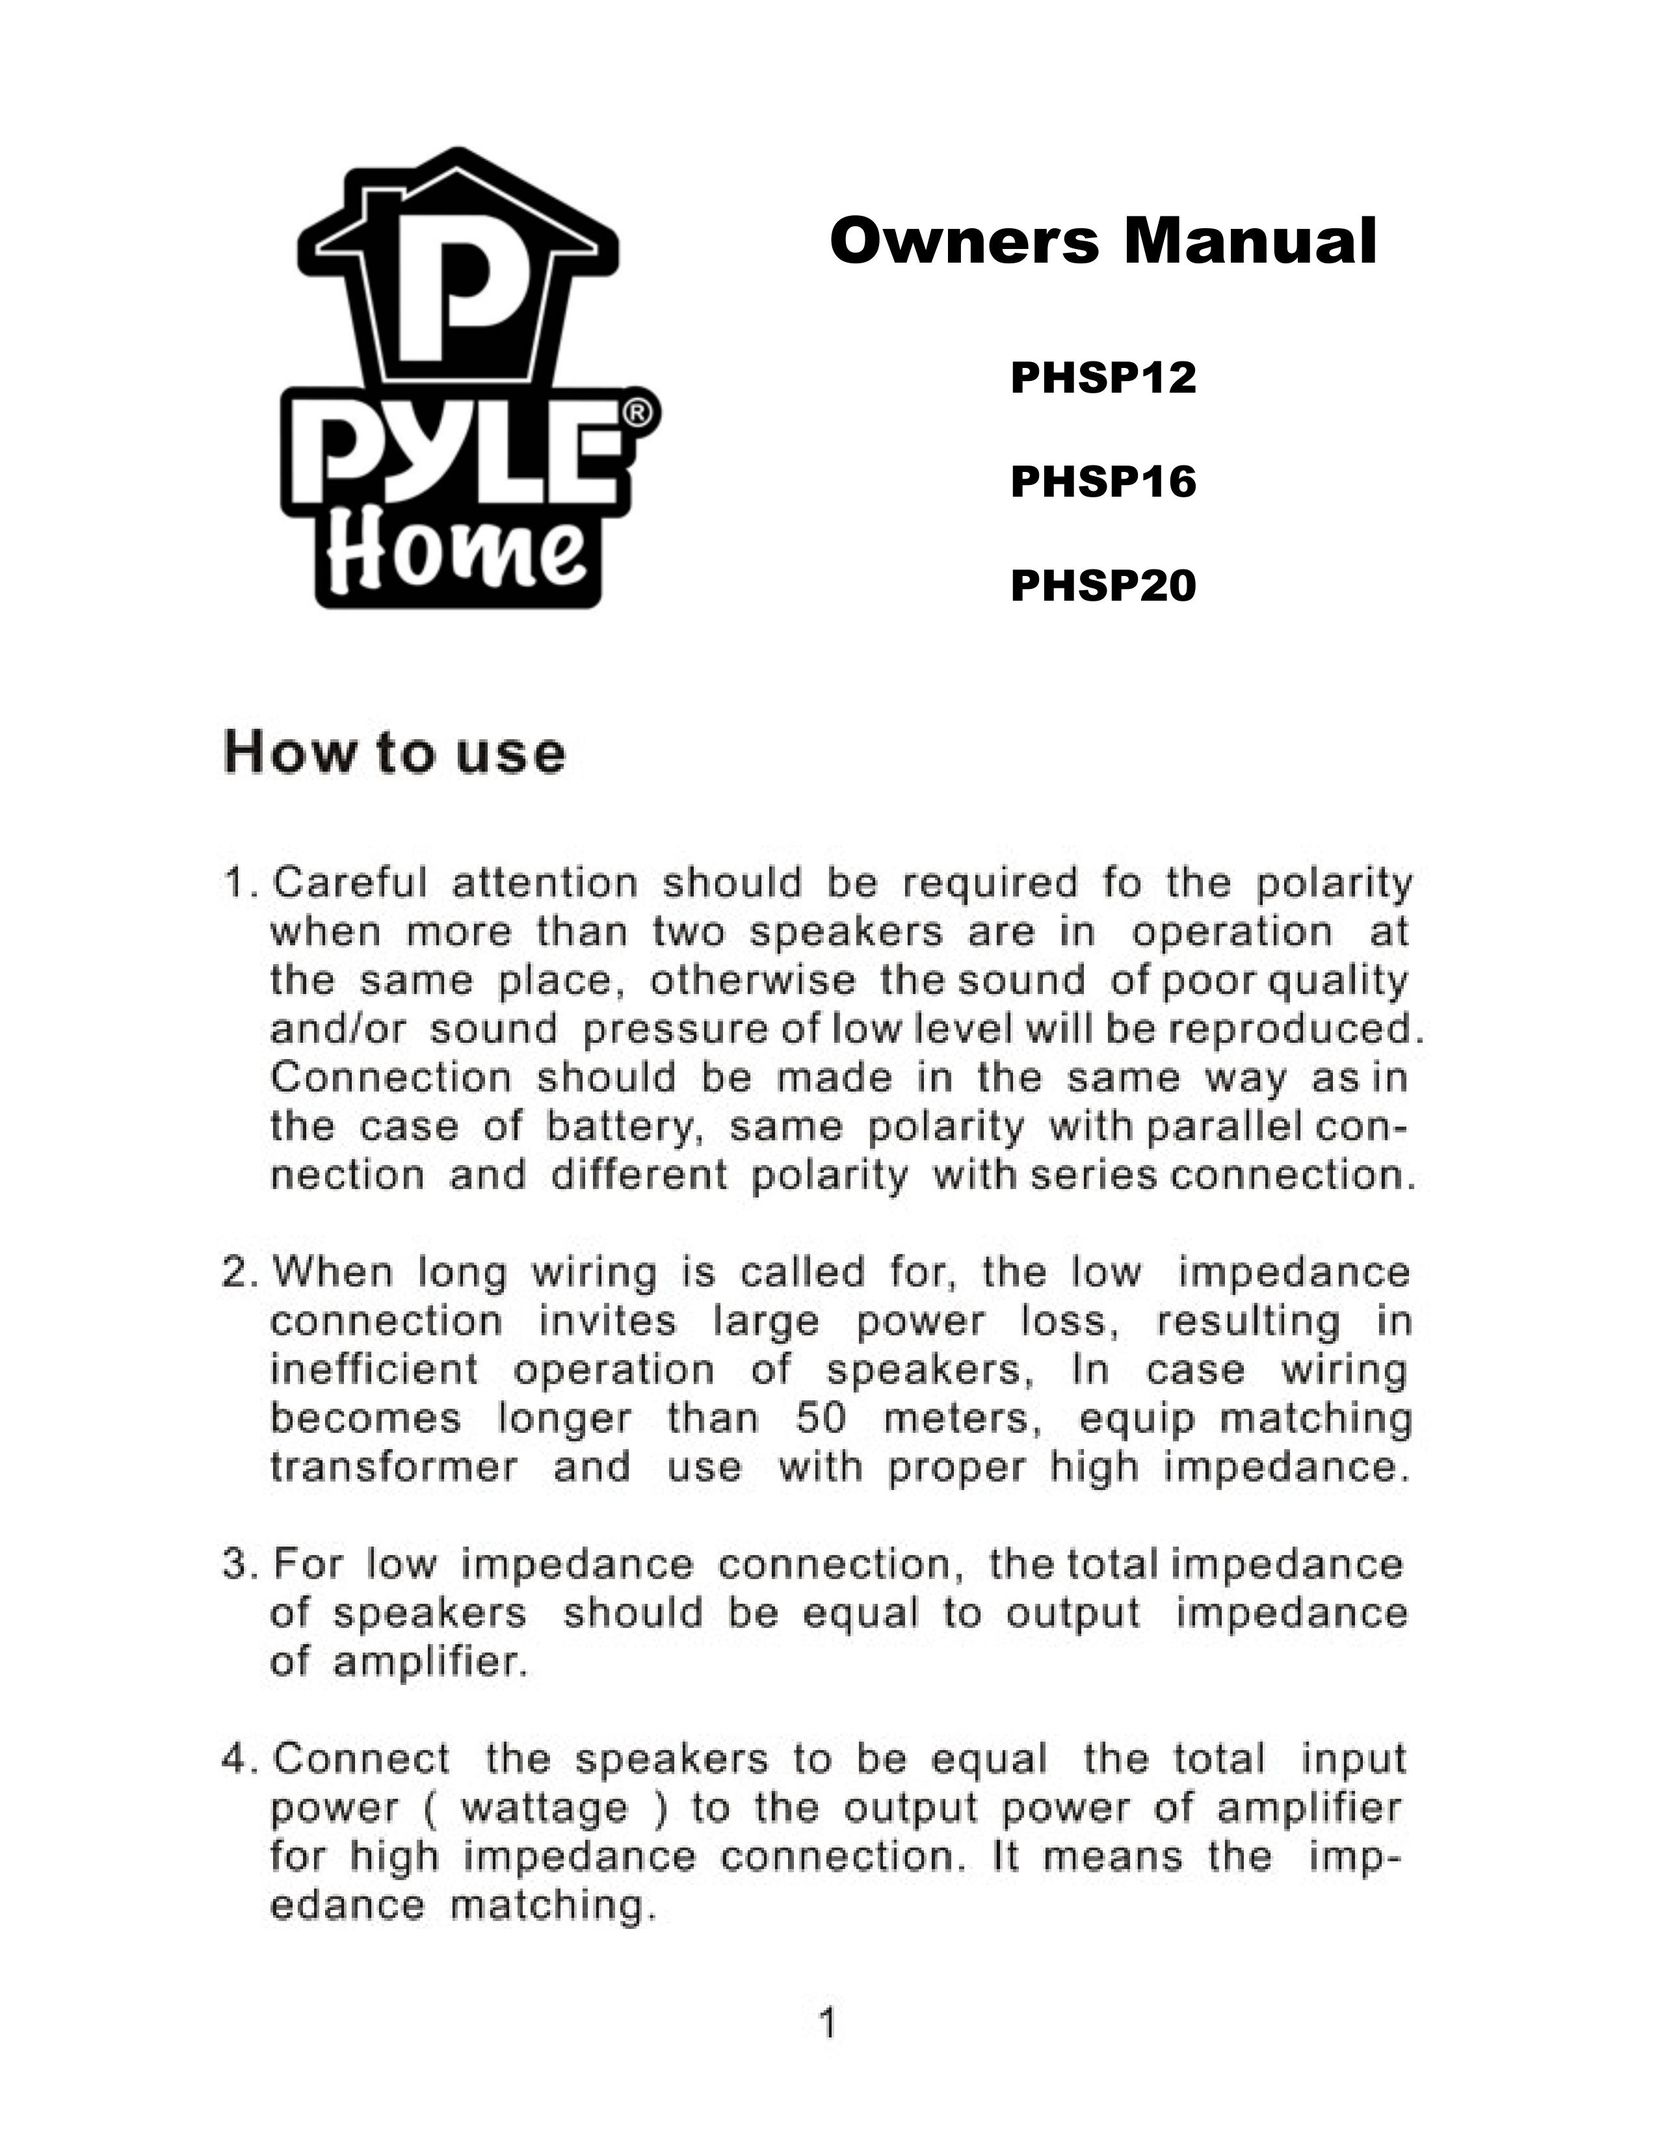 PYLE Audio PHSP12 Speaker System User Manual